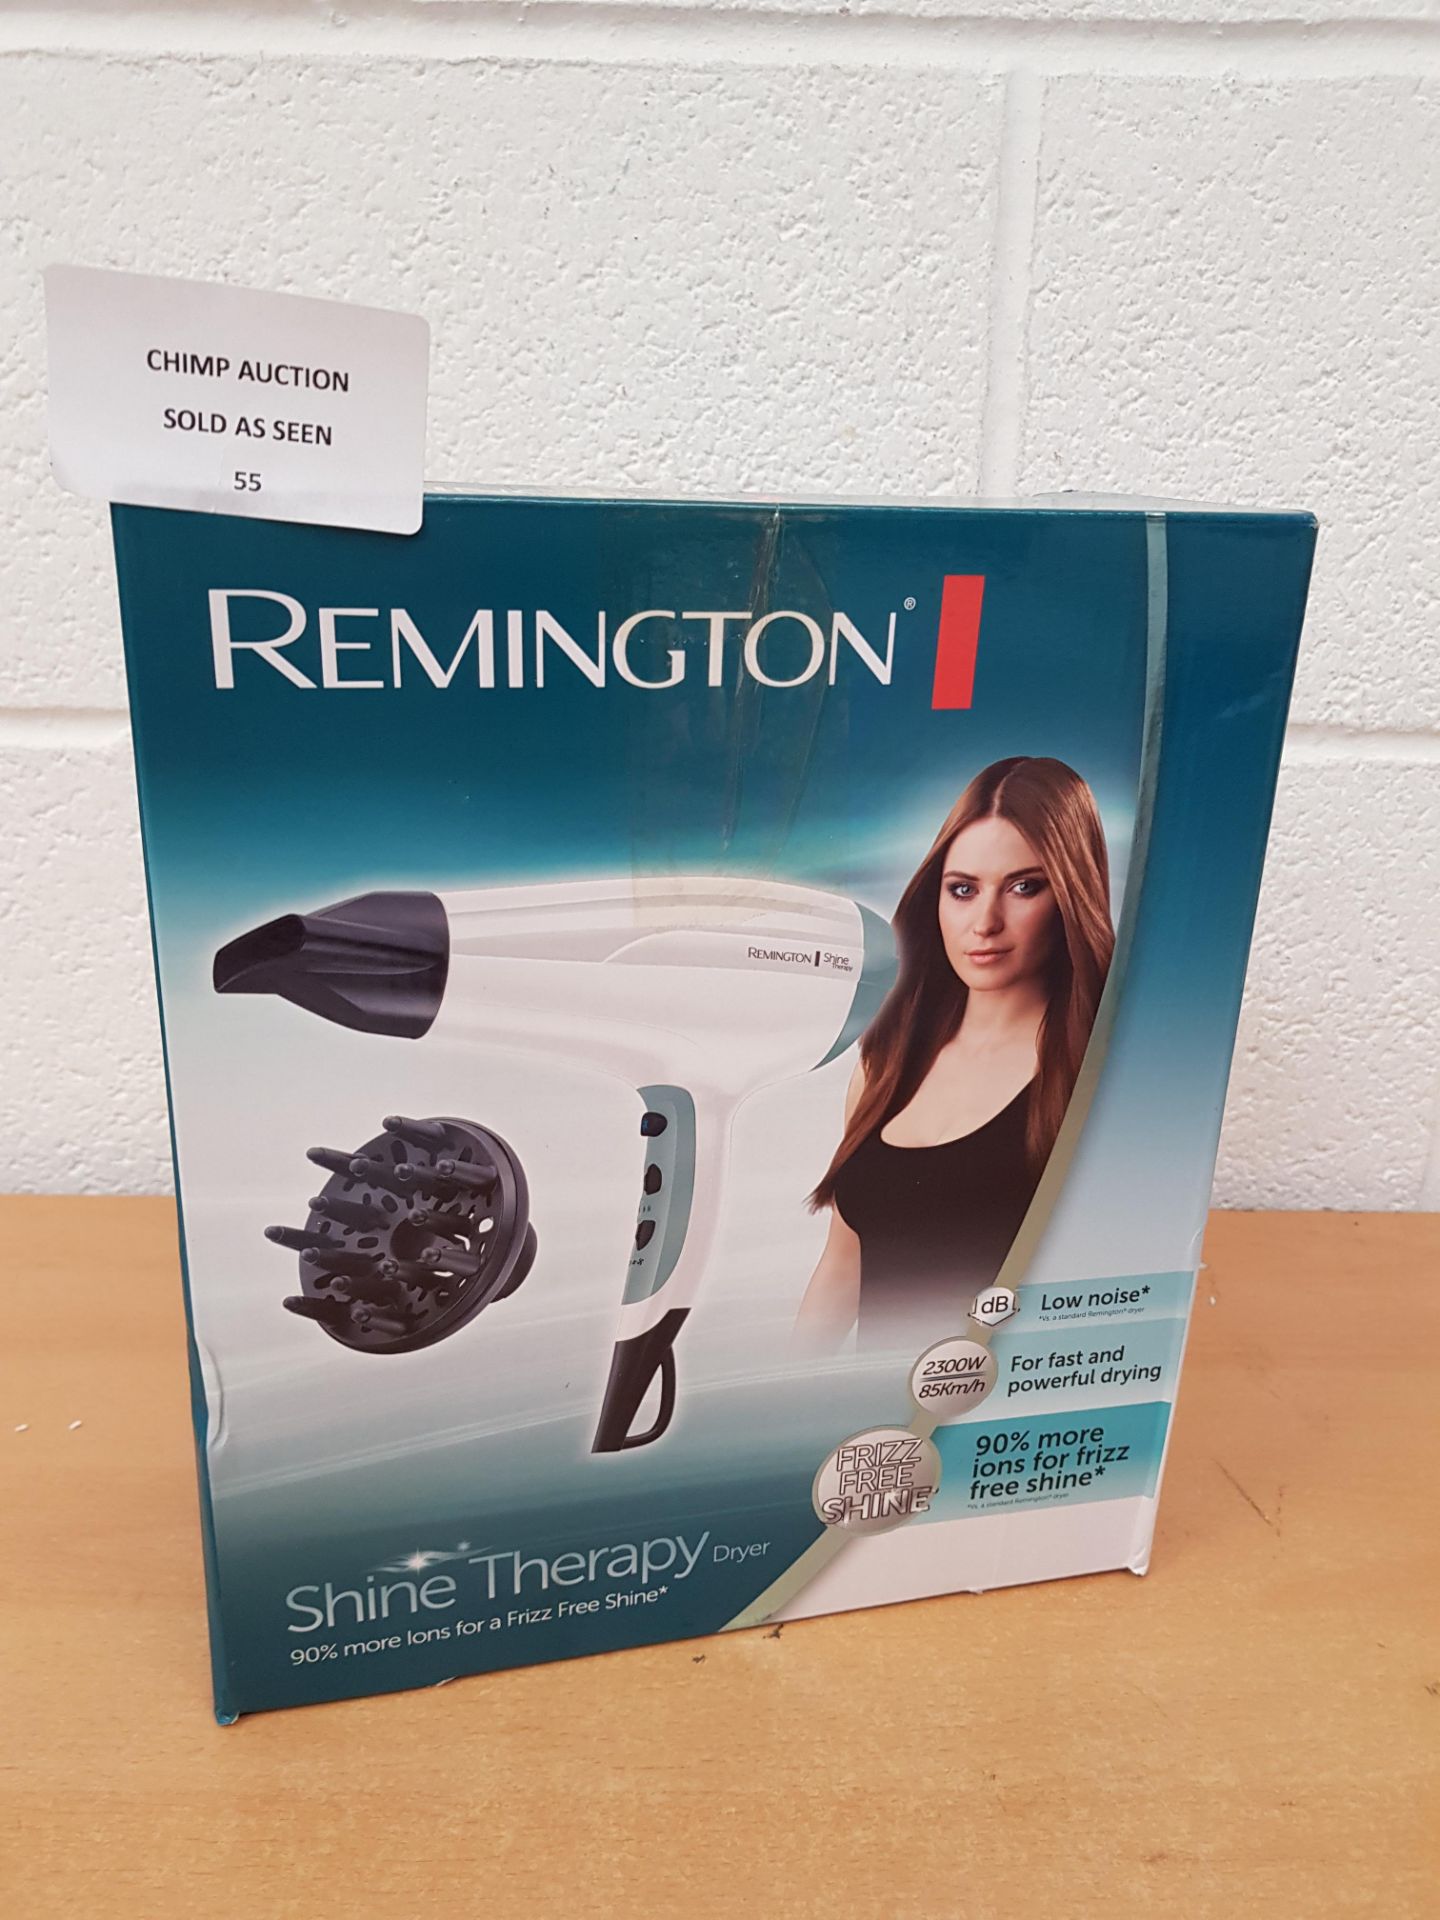 Remington D5216 Shine Therapy Hair Dryer